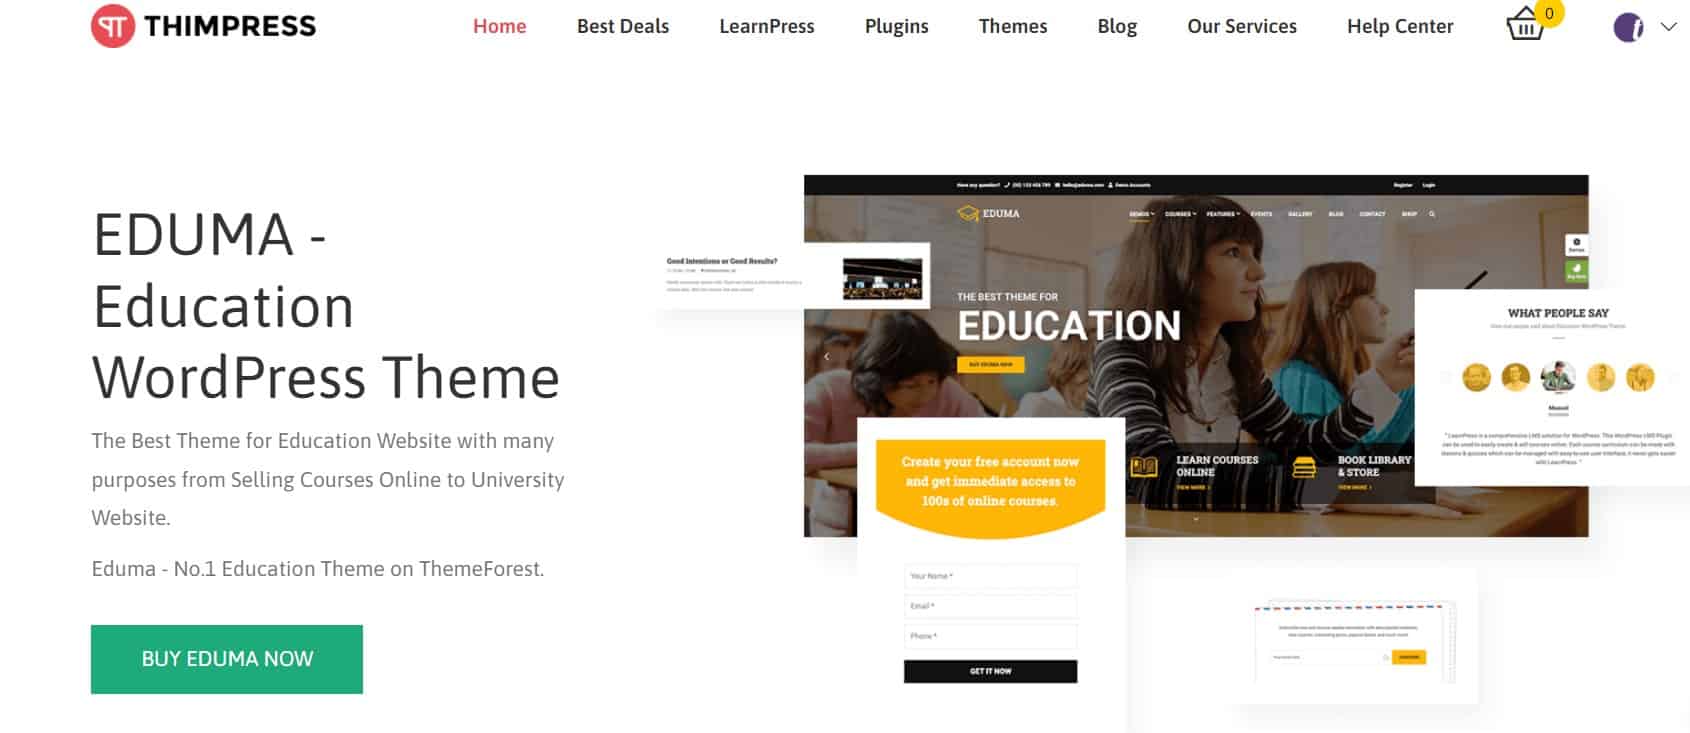 ThimPress Homepage Example Design